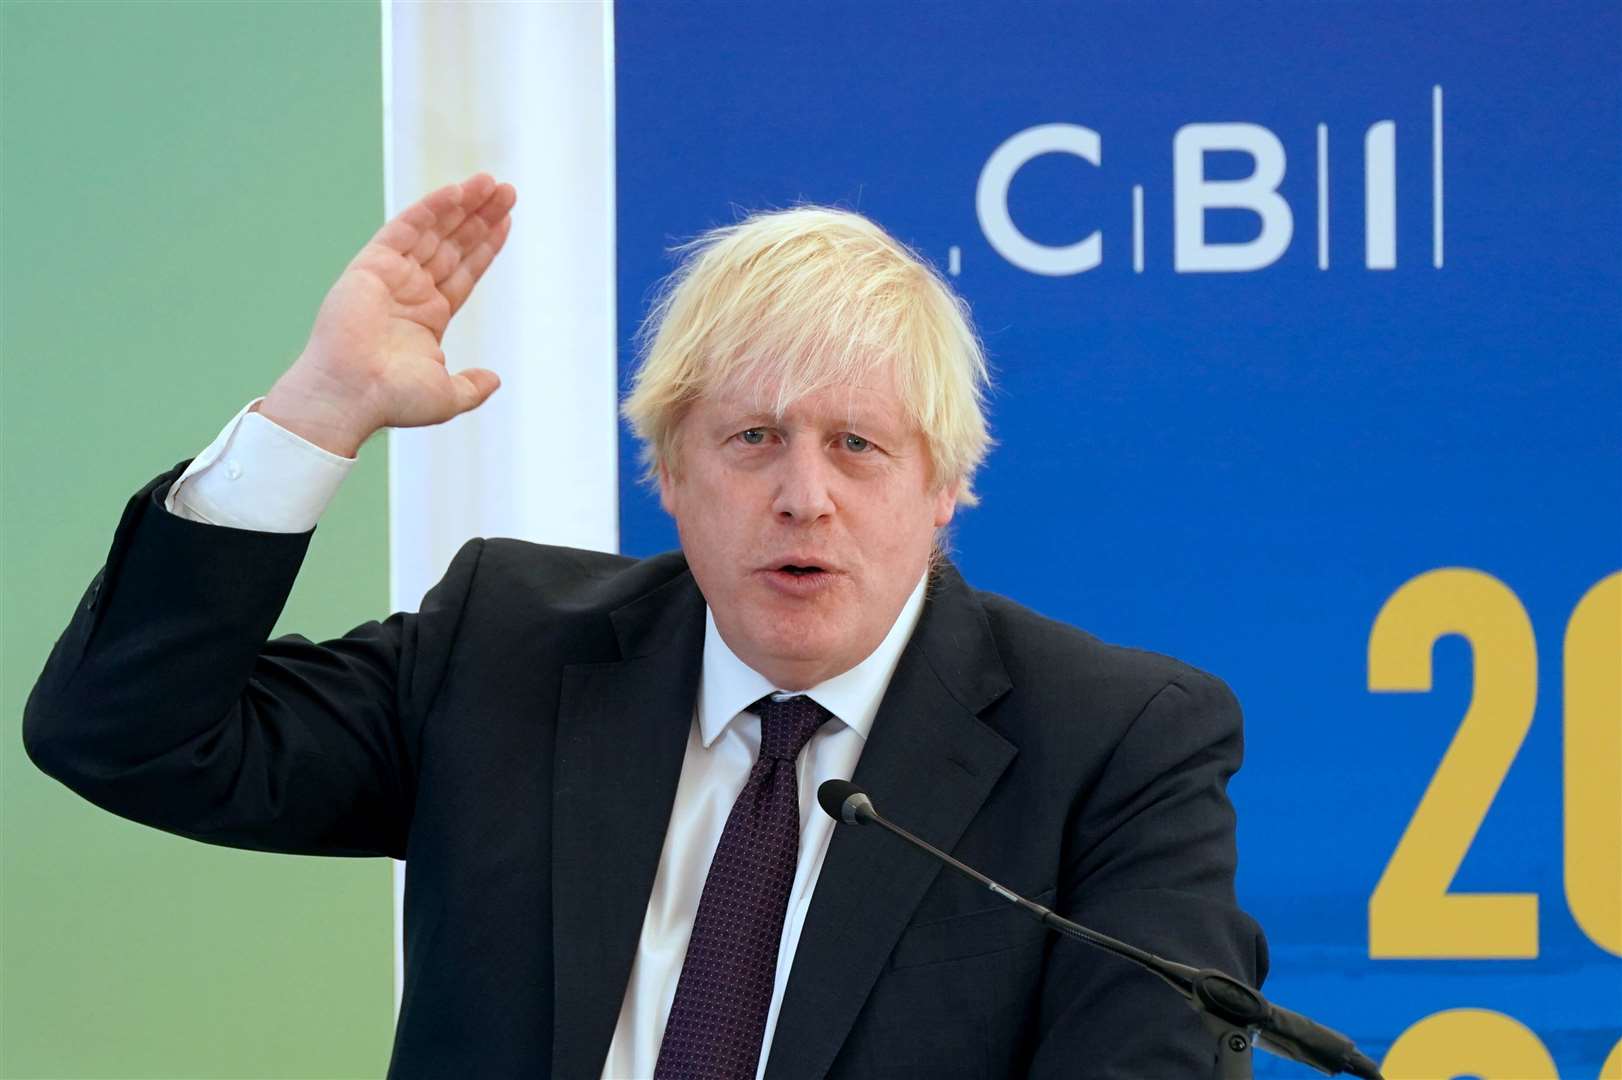 Prime Minister Boris Johnson speaking during the CBI annual conference (Owen Humphreys/PA)